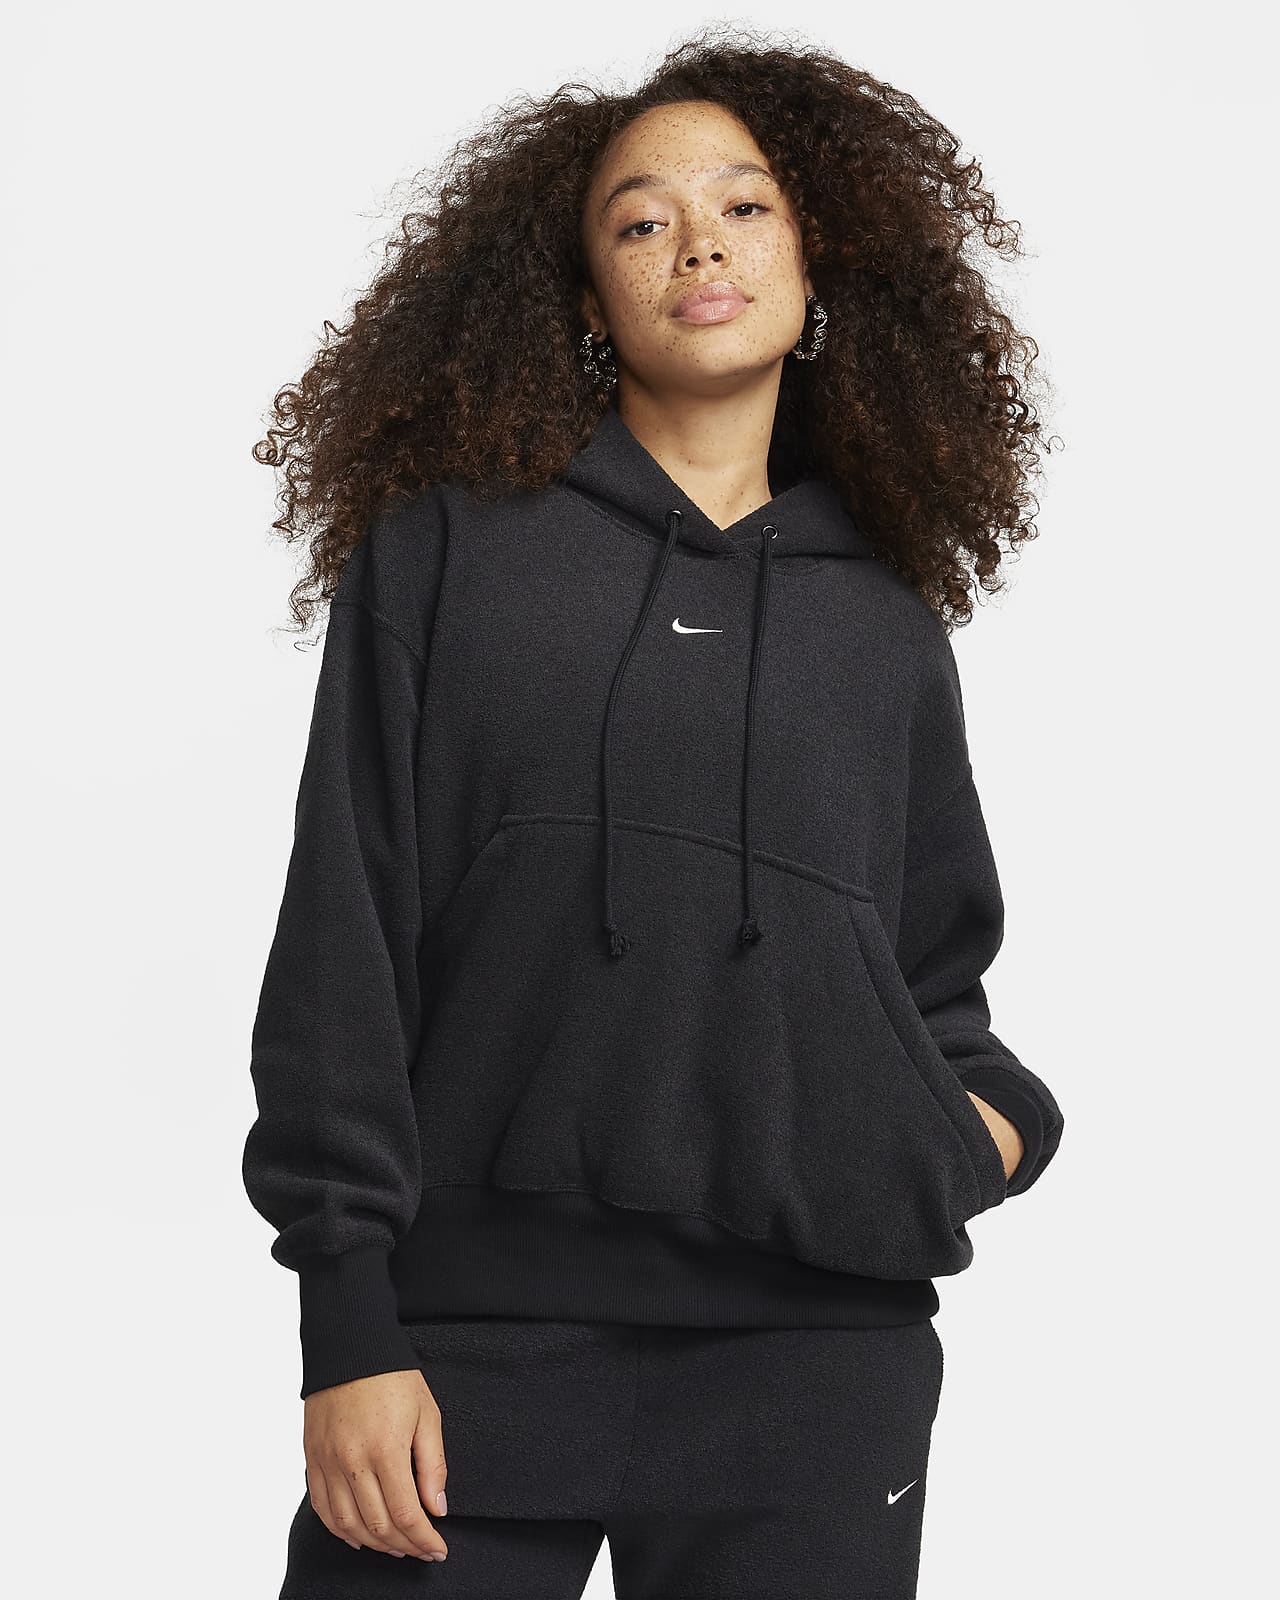 Nike Sportswear Phoenix Plush oversized, bequemer Fleece-Hoodie für Damen